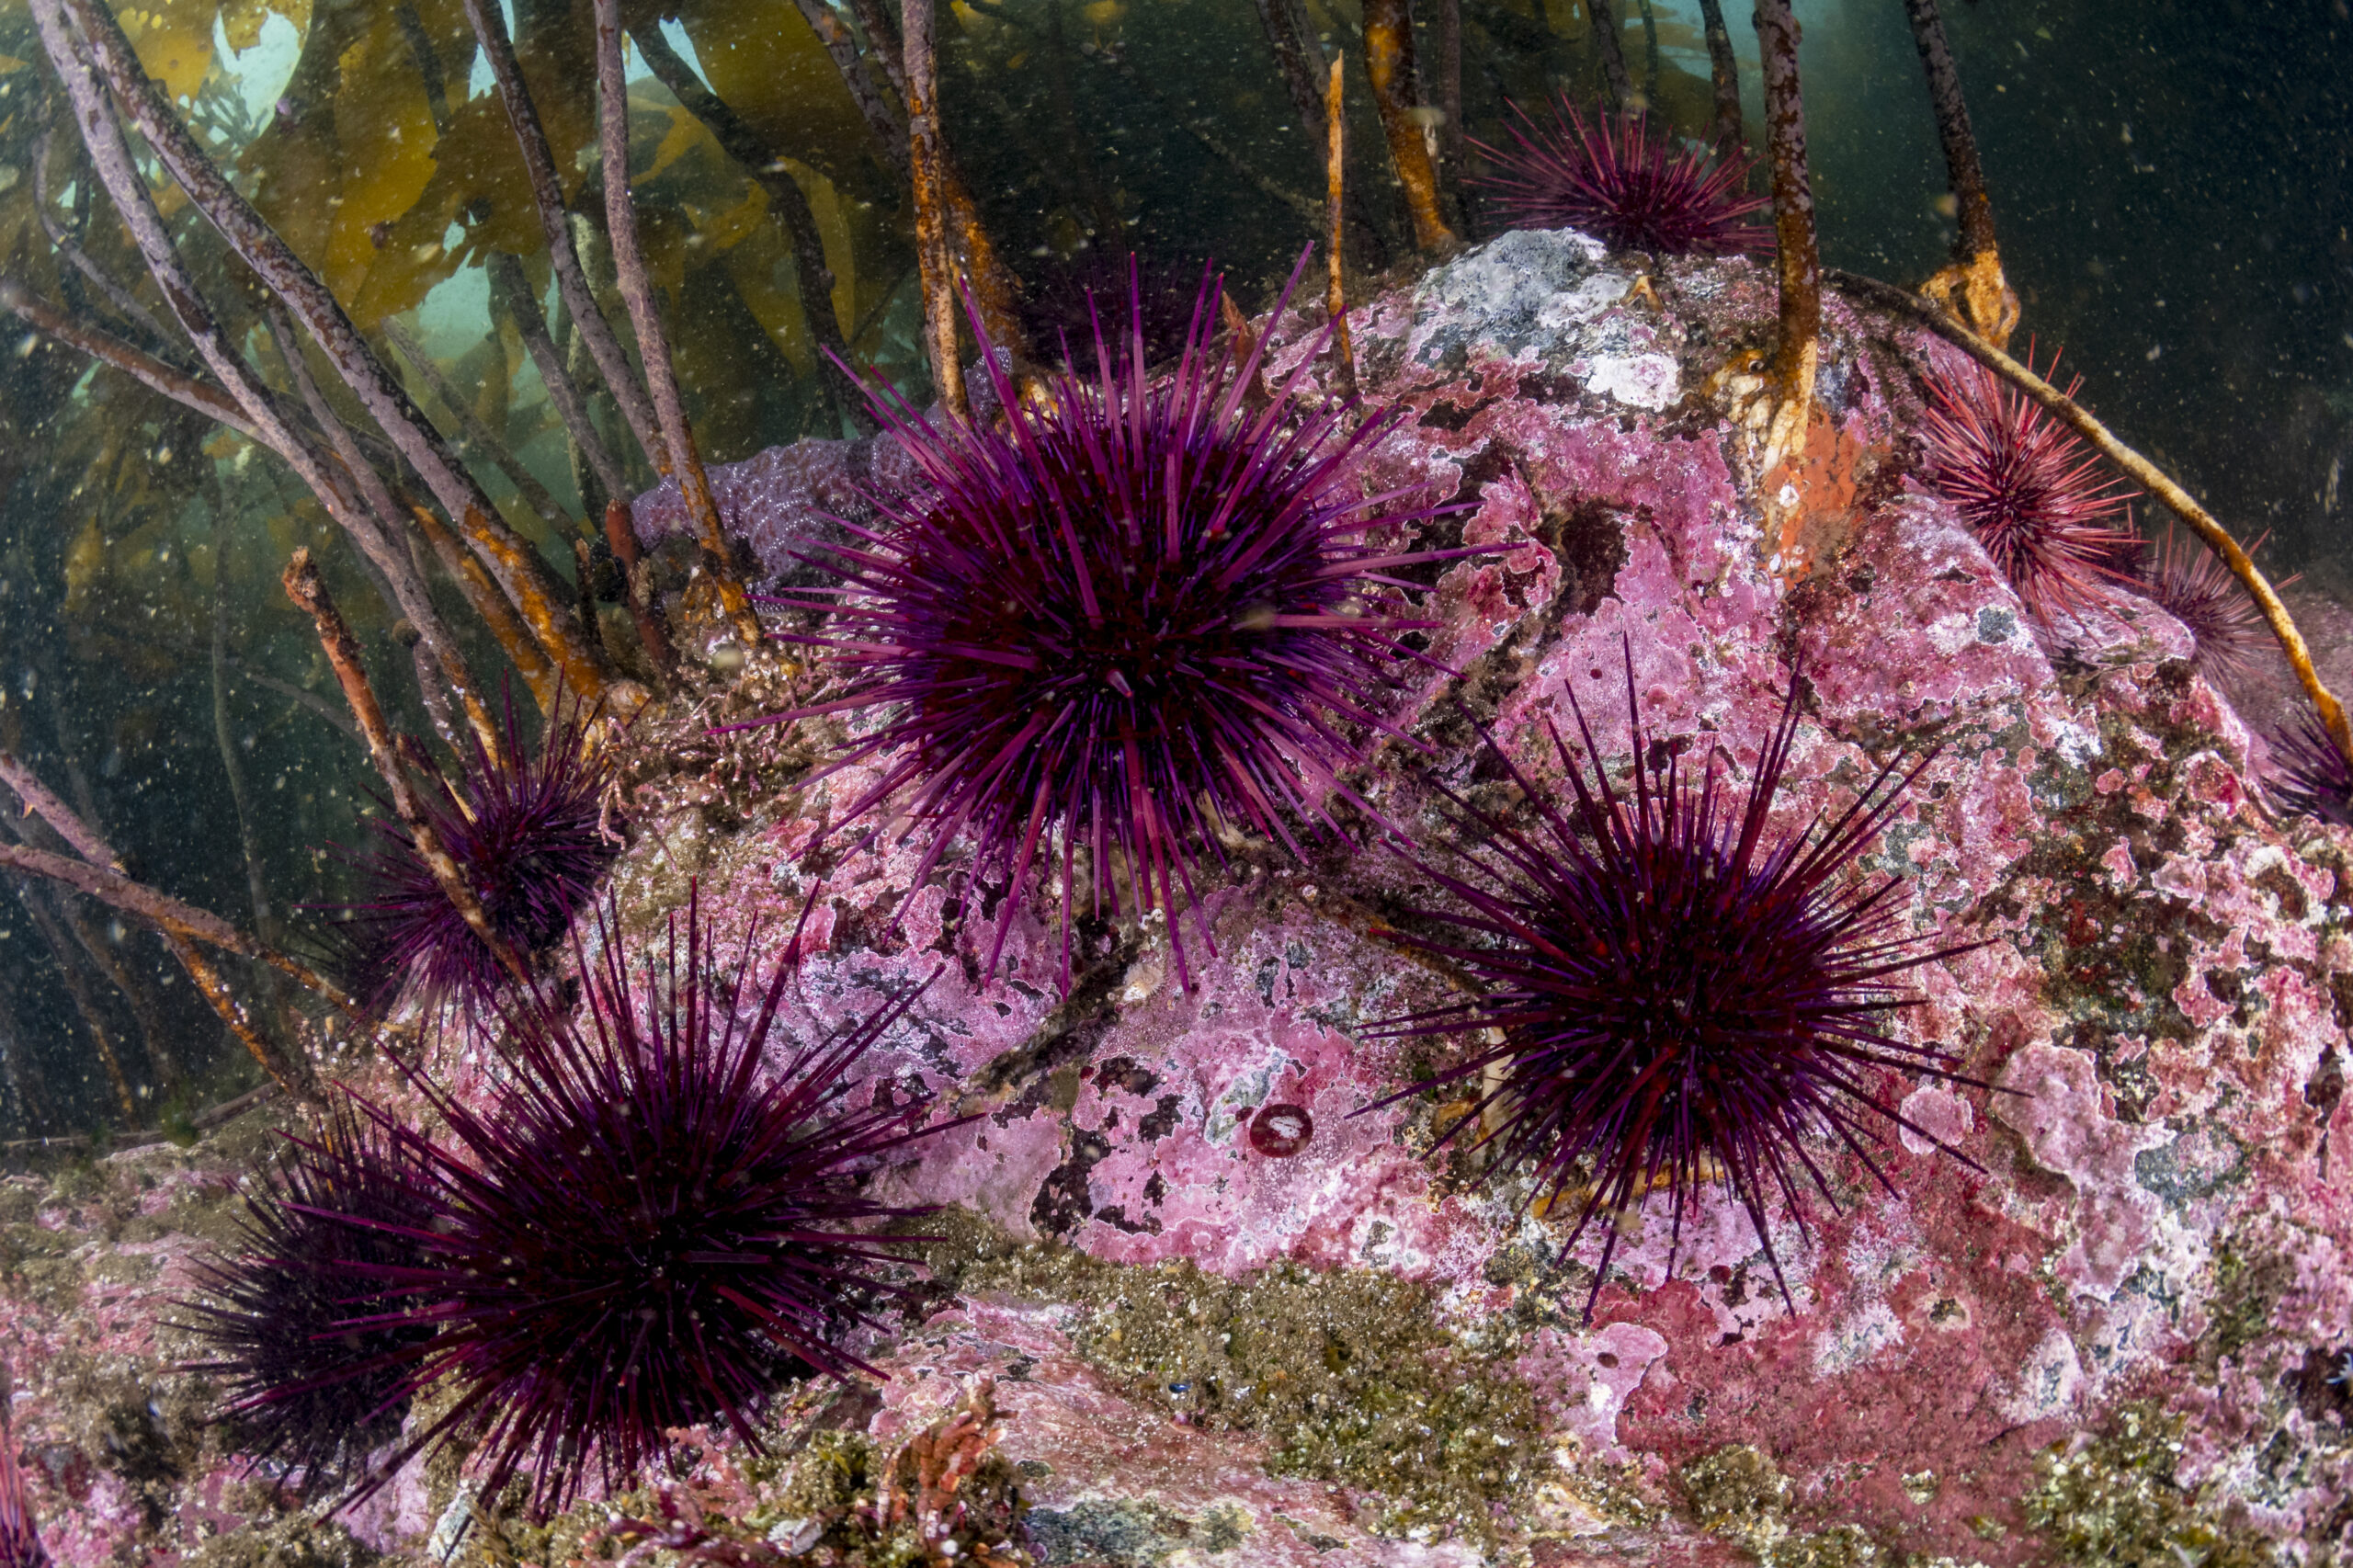 A close up of purple, spikey sea urchins